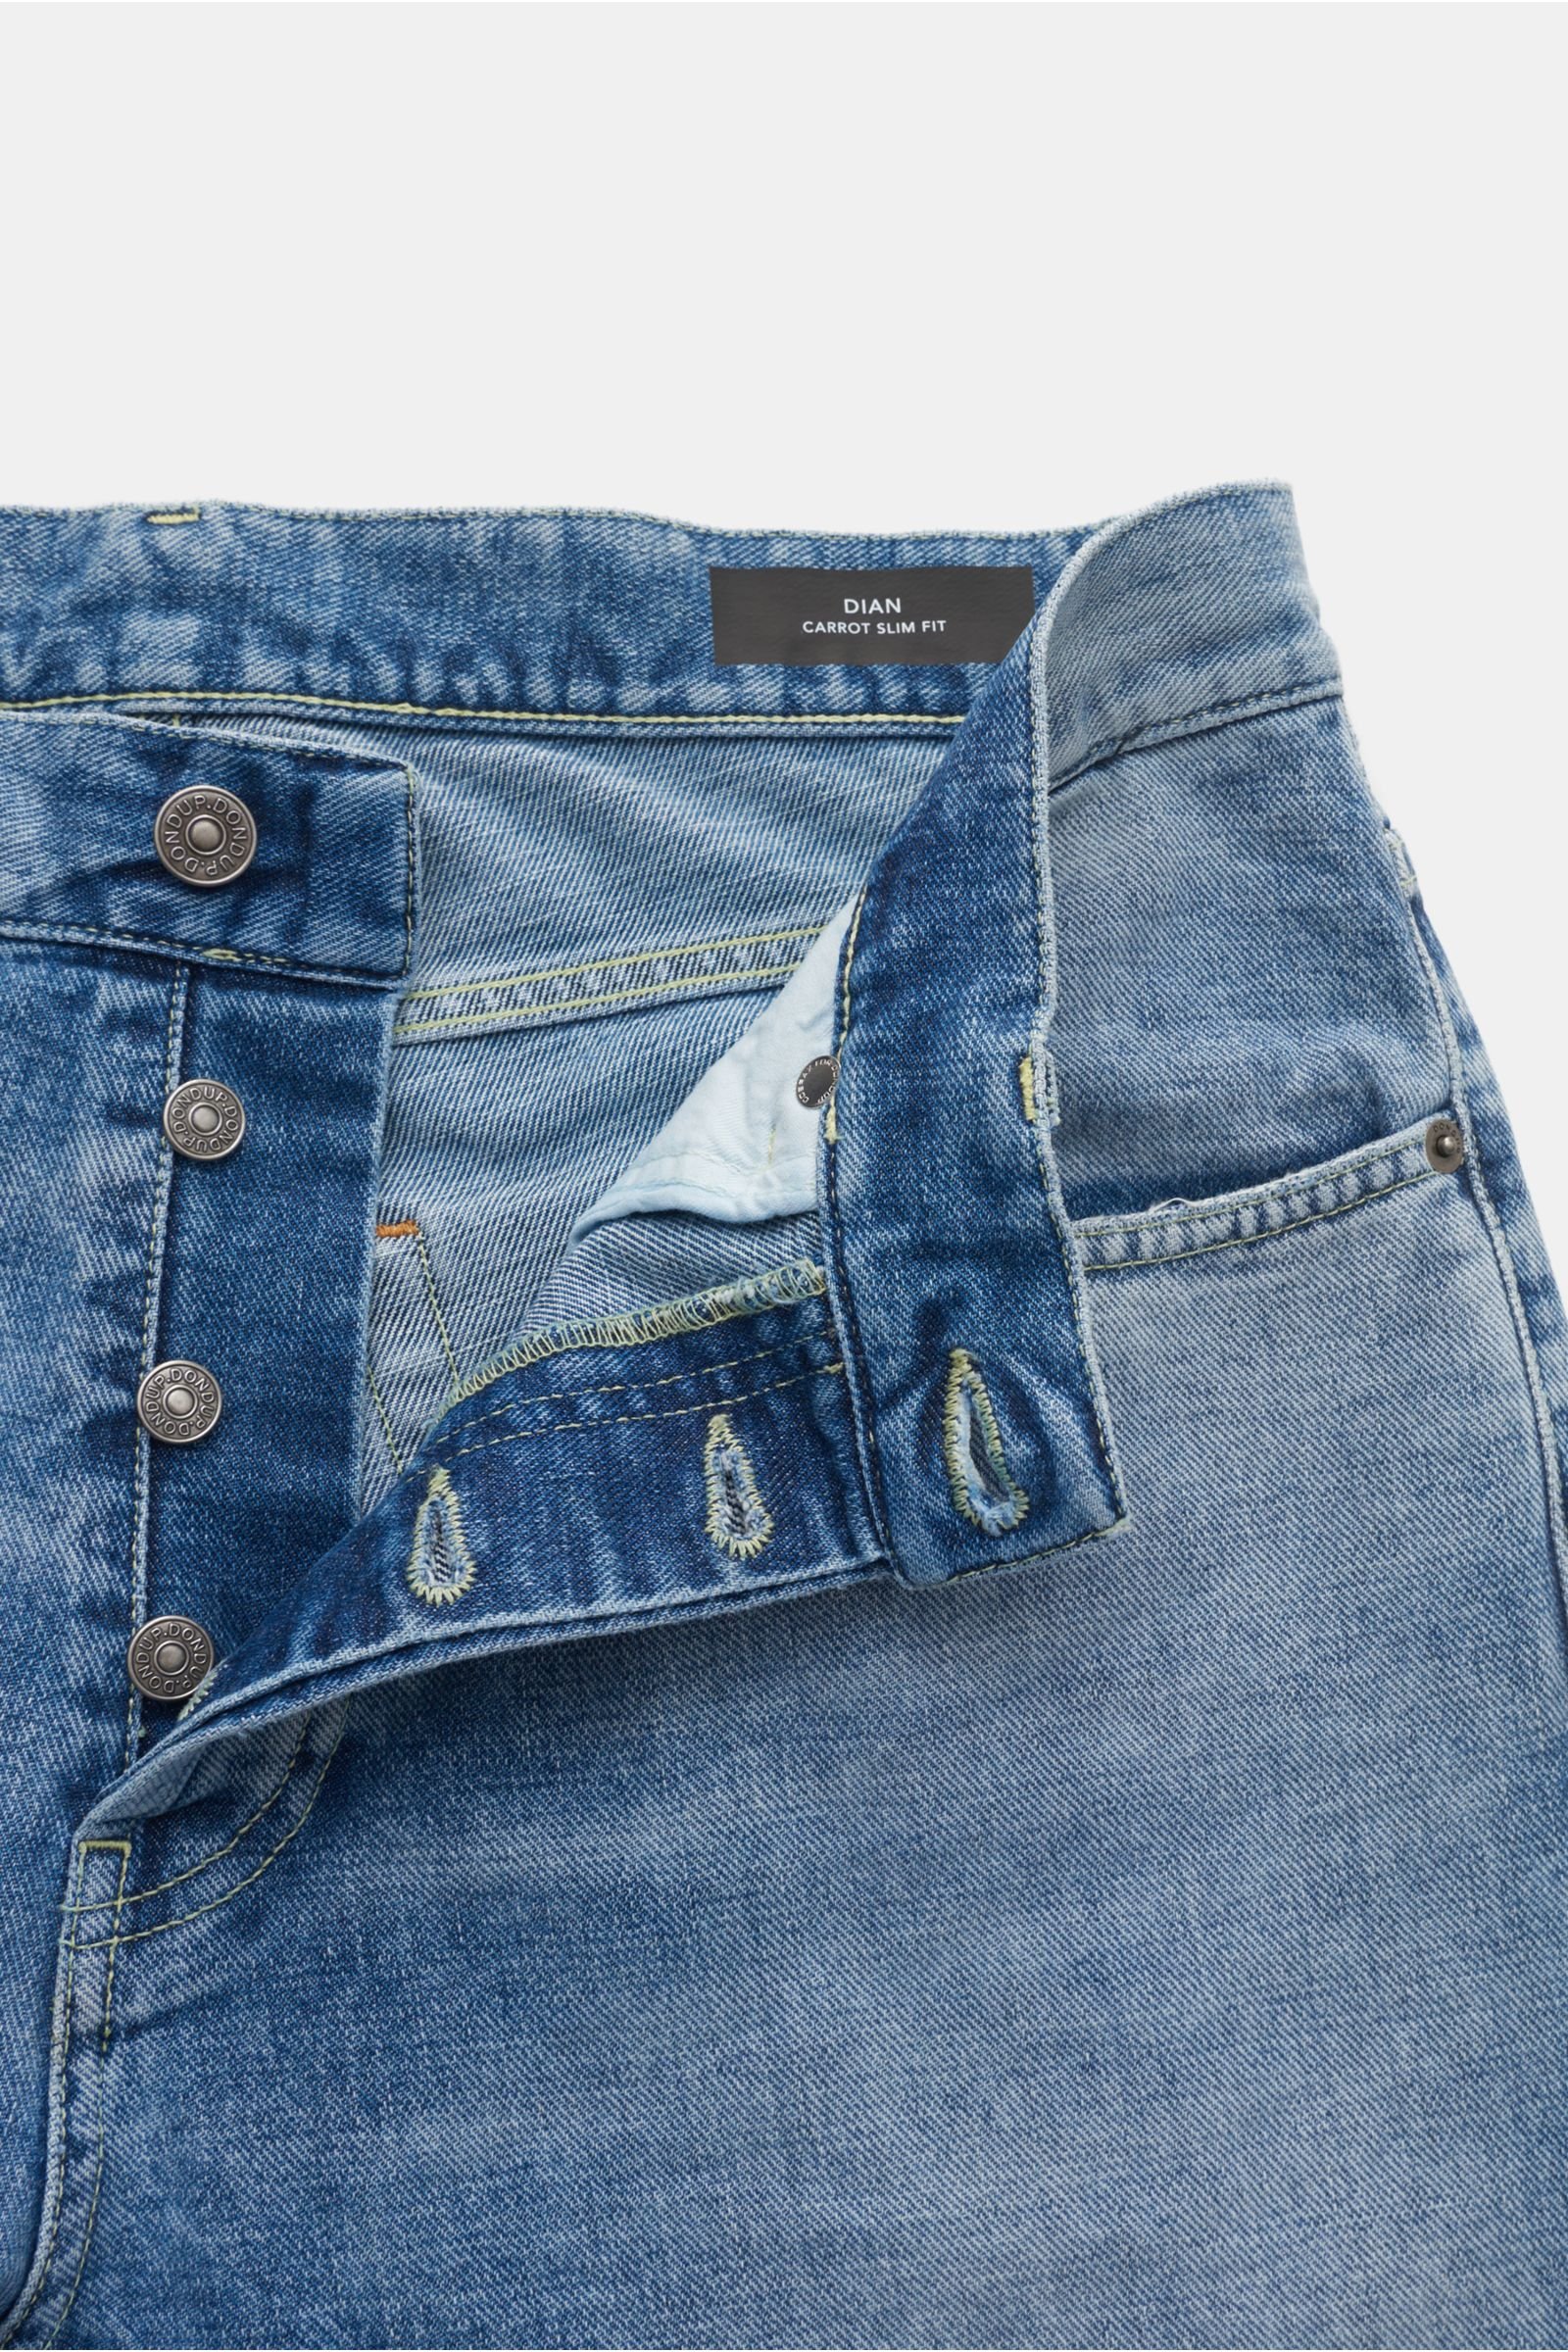 DONDUP jeans 'Dian Carrot Slim Fit' light blue | BRAUN Hamburg